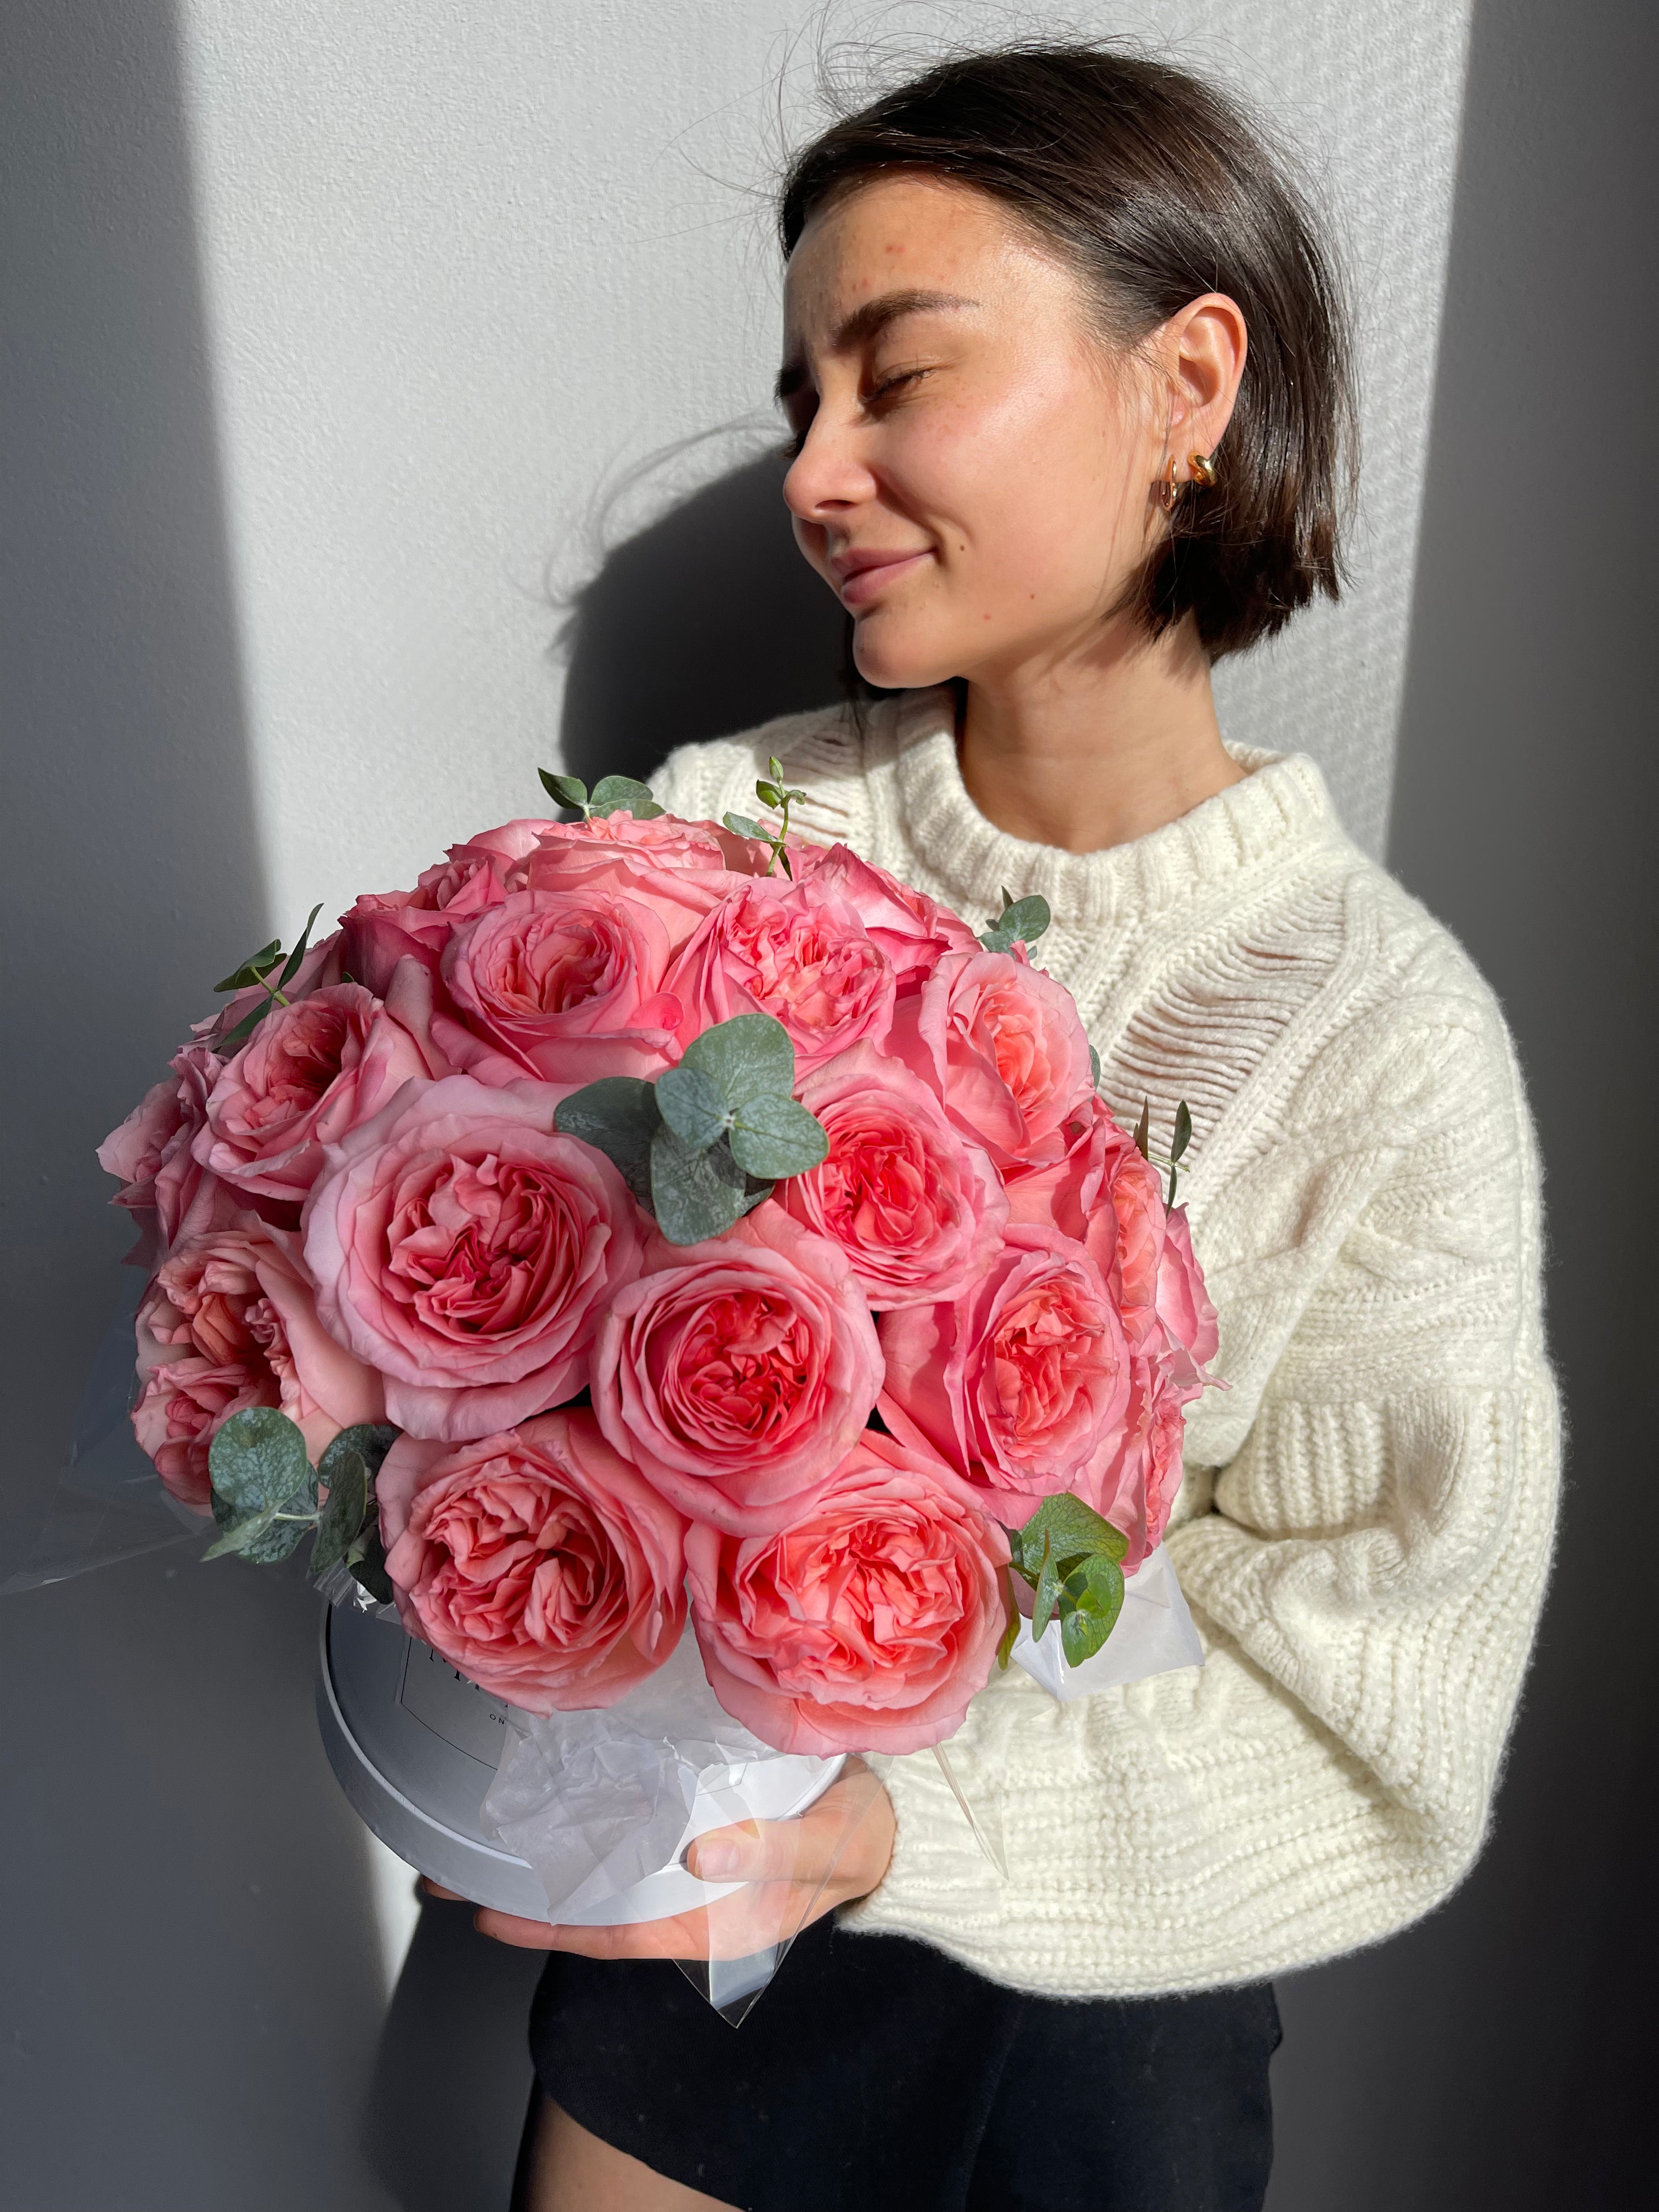 Flower box “Pink Expression” - garden roses